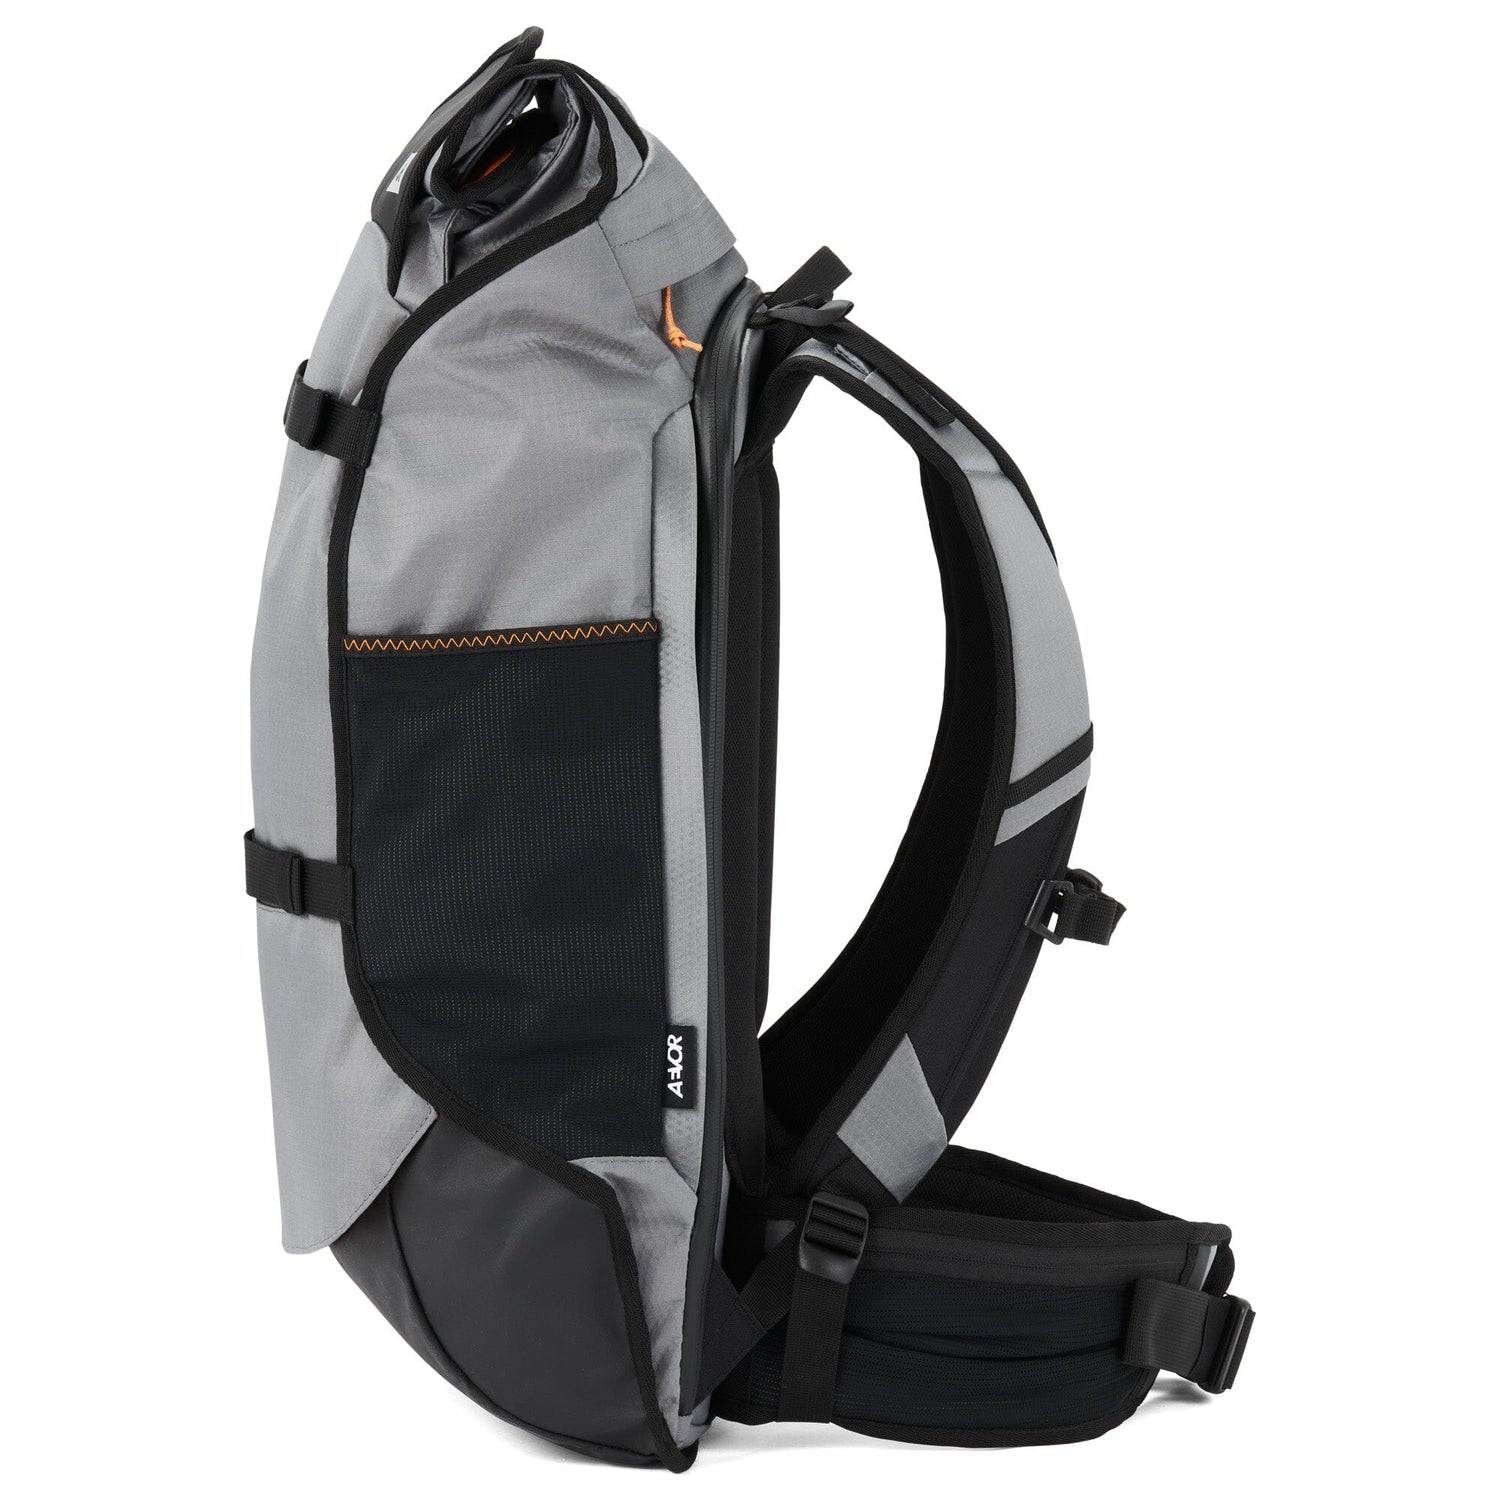 Aevor Travel Pack Proof - Waterproof backpack made from recycled PET-bottles Sundown Bags